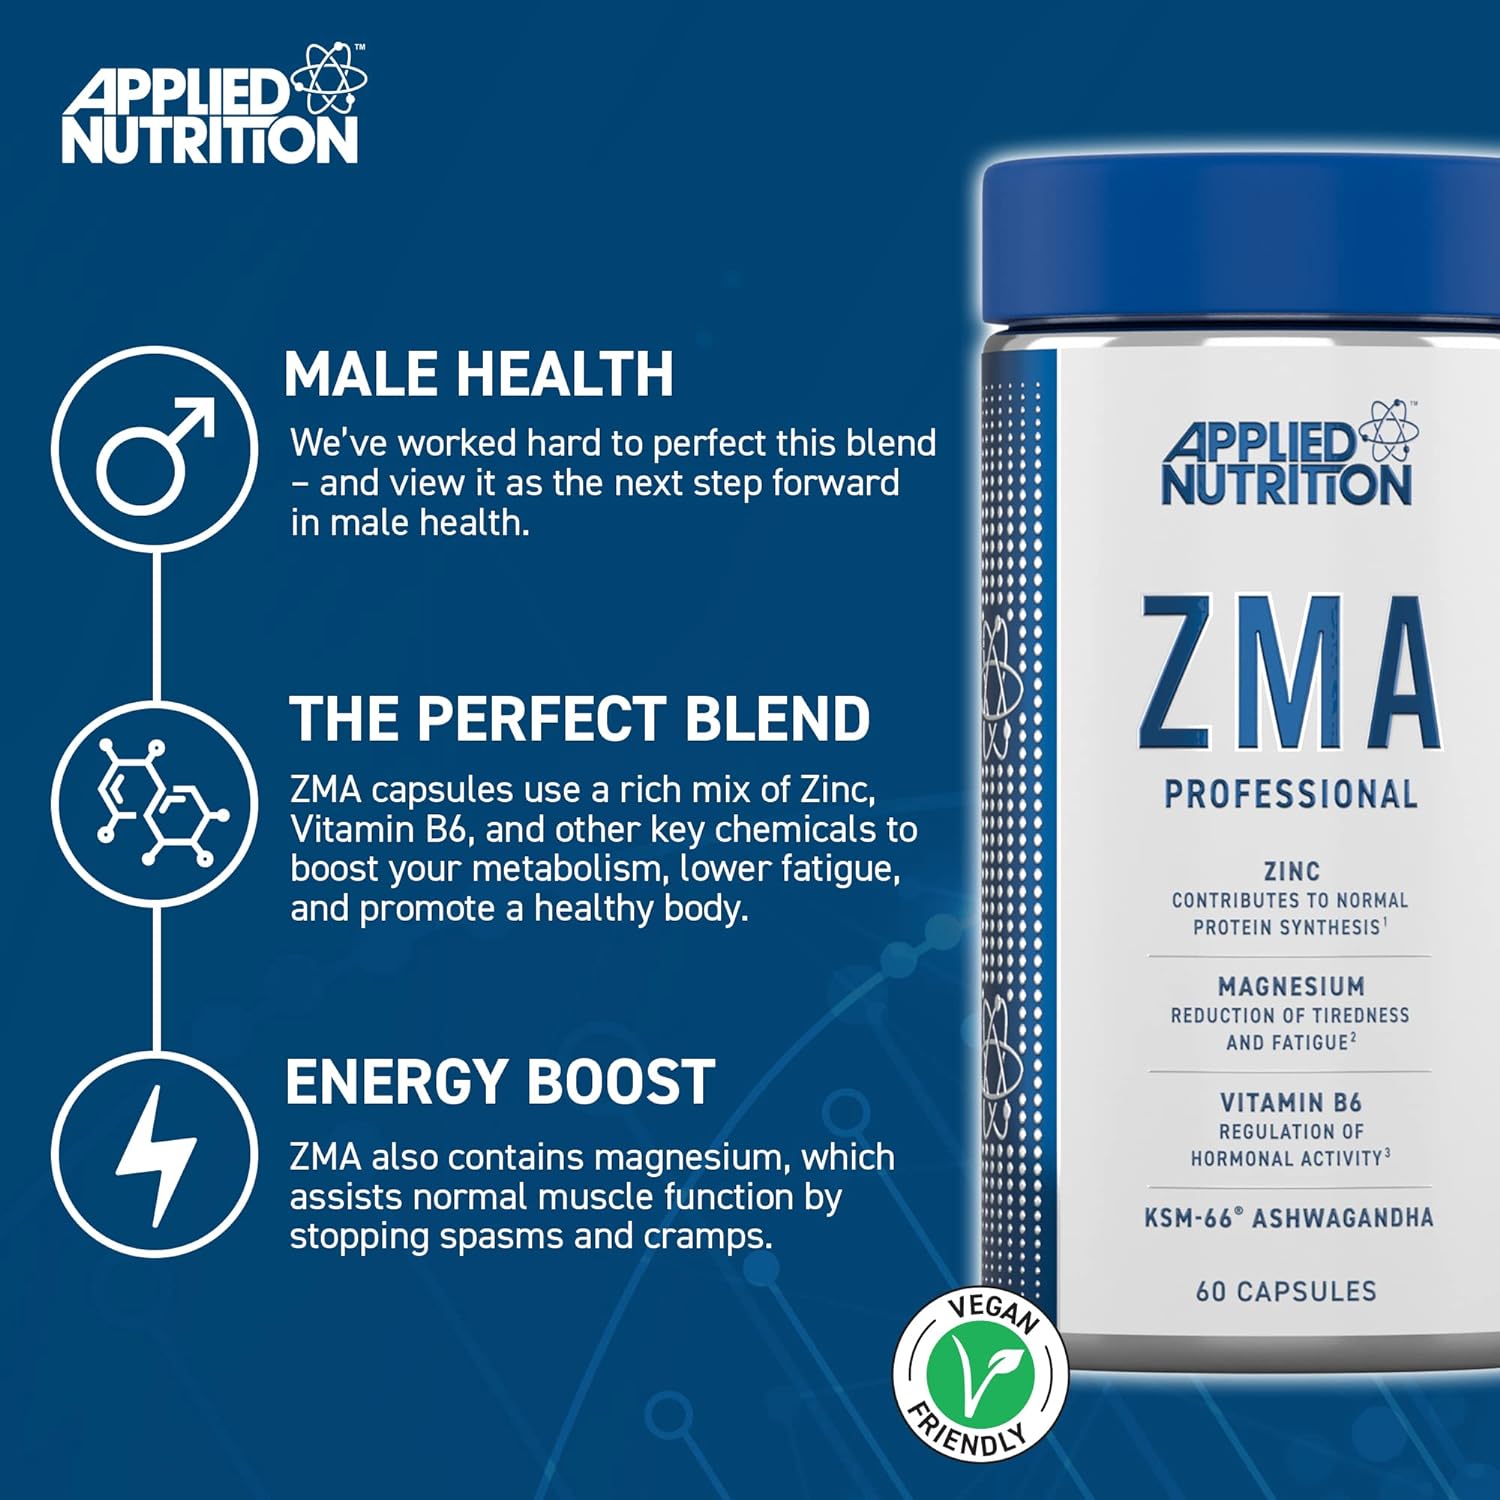 Applied Nutrition ZMA PRO Zinc and Magnesium plus Vitamin B6 60 Veggie Capsules